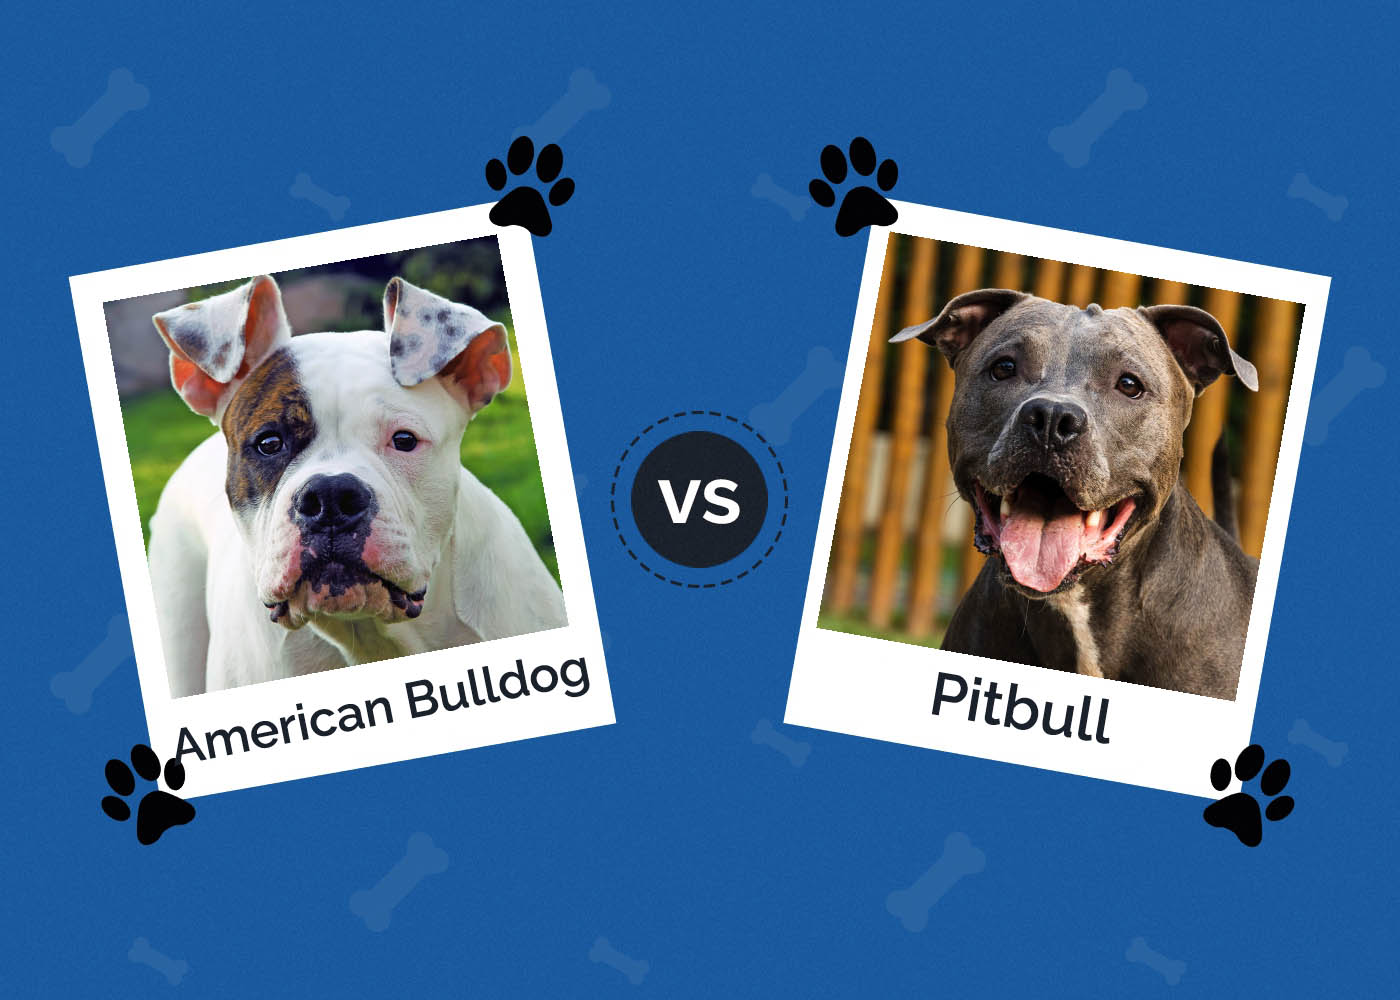 American Bulldog vs Pitbull